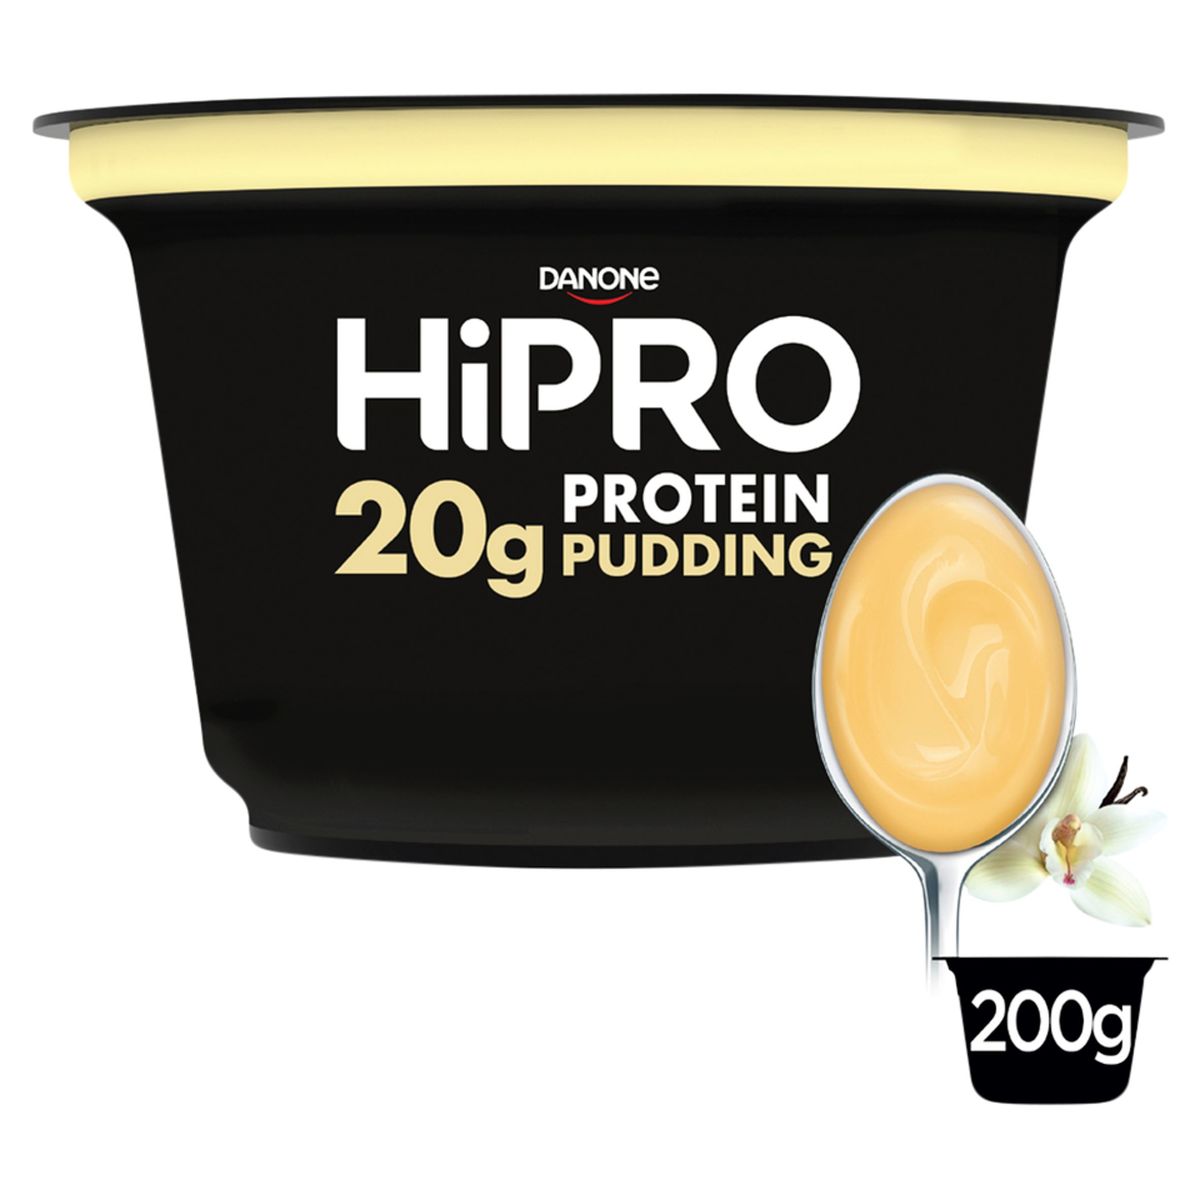 DANONE HIPRO 20g Proteines Pudding Saveur Vanille  0% m.g. 200 g